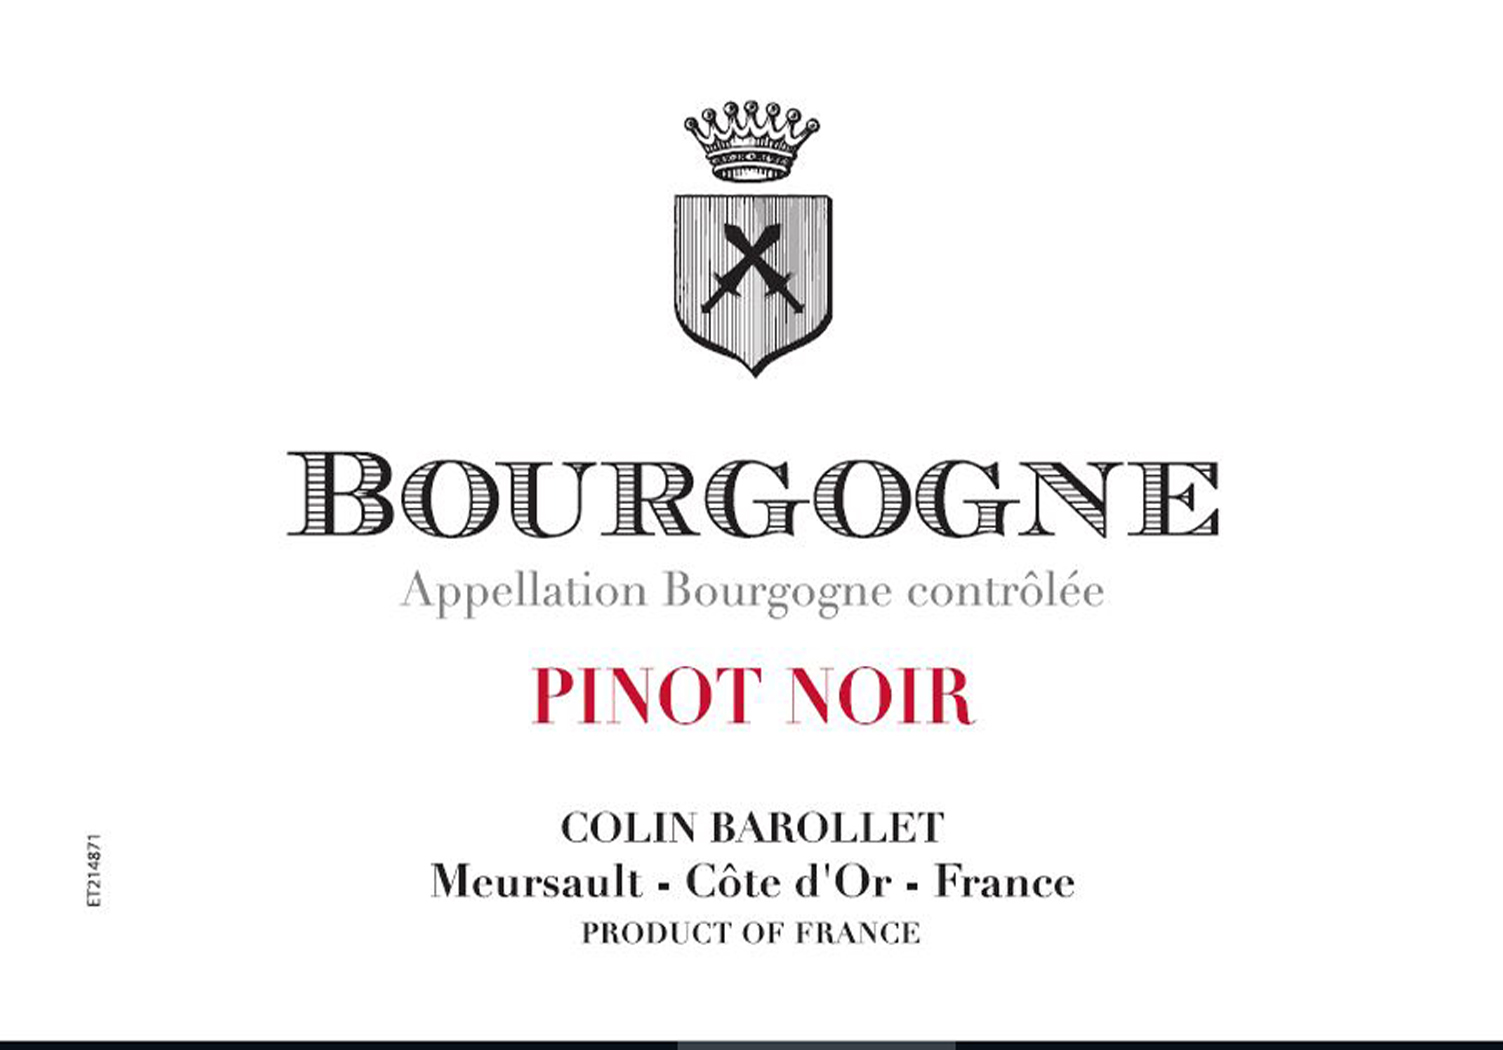 Colin Barollet - Bourgogne Pinot Noir label